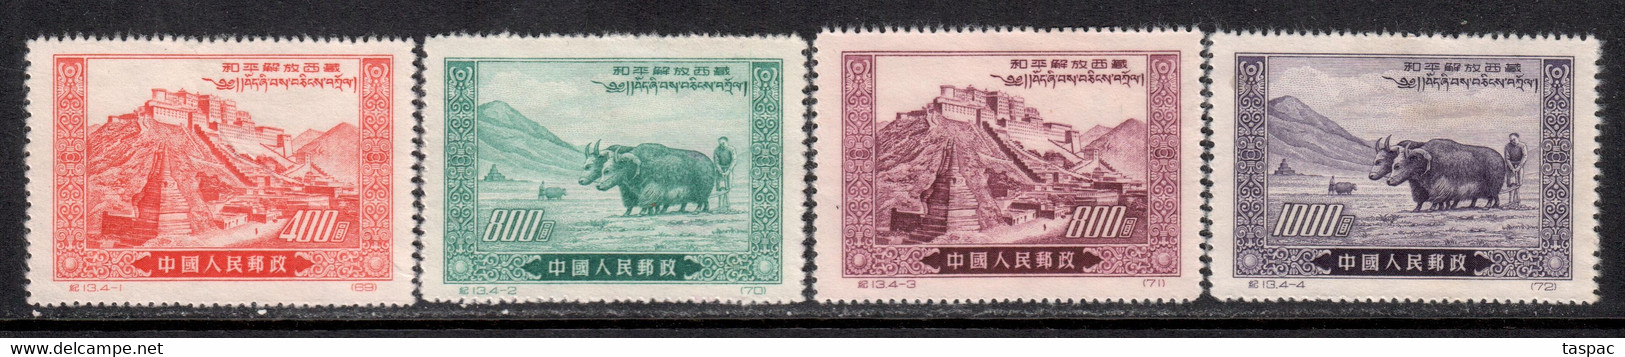 China P.R. 1952 Mi# 137-140 II (*) Mint No Gum, Hinged - Reprints - Liberation Of Tibet - Ristampe Ufficiali